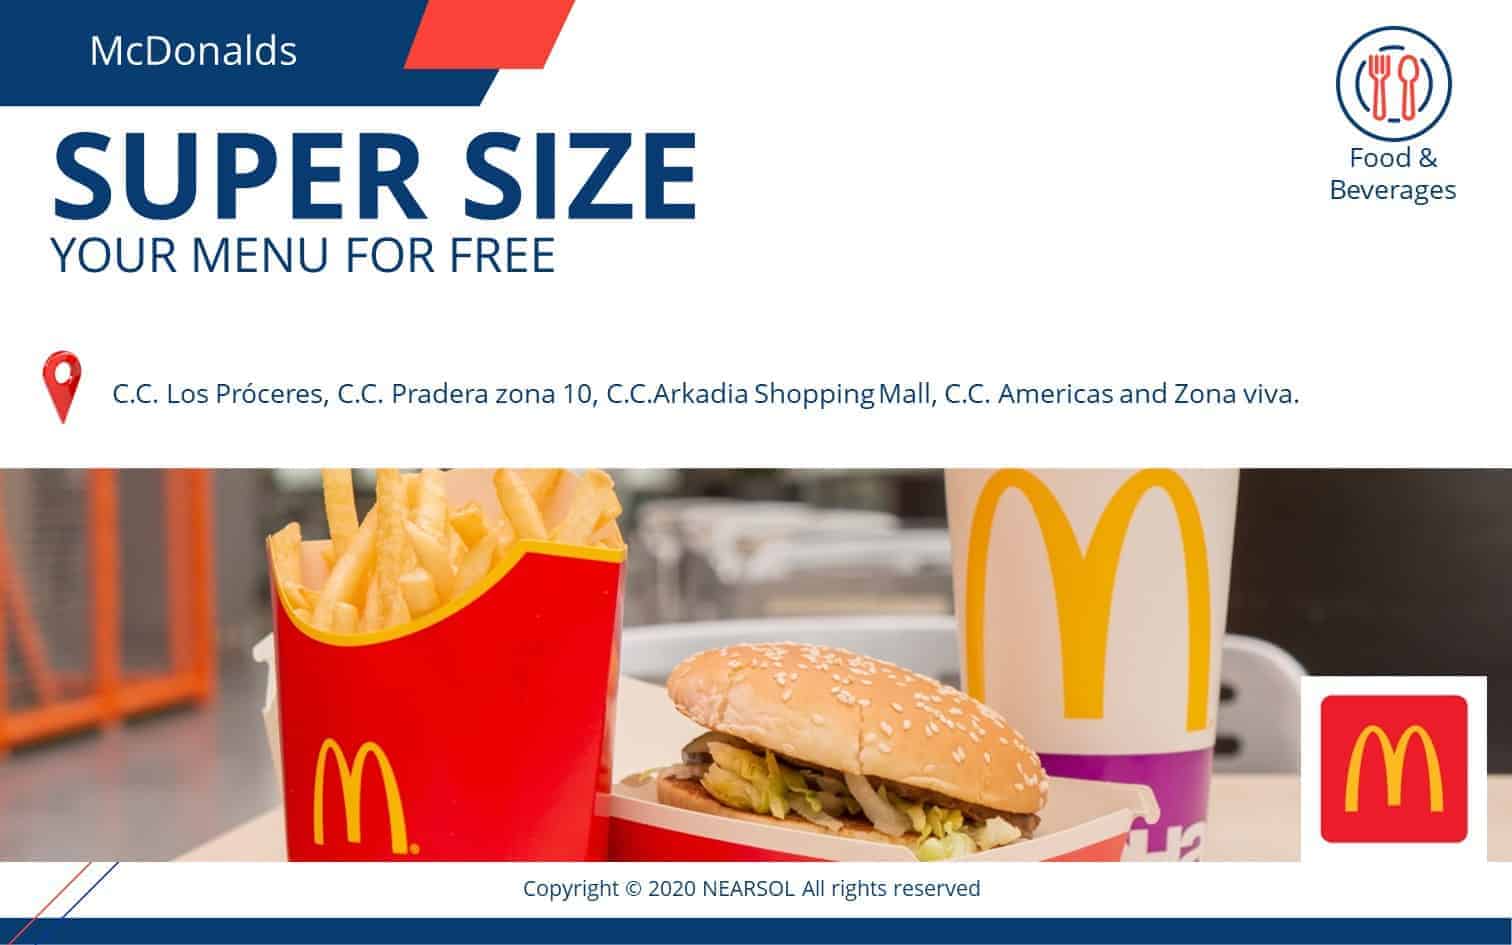 McDonald's promo image